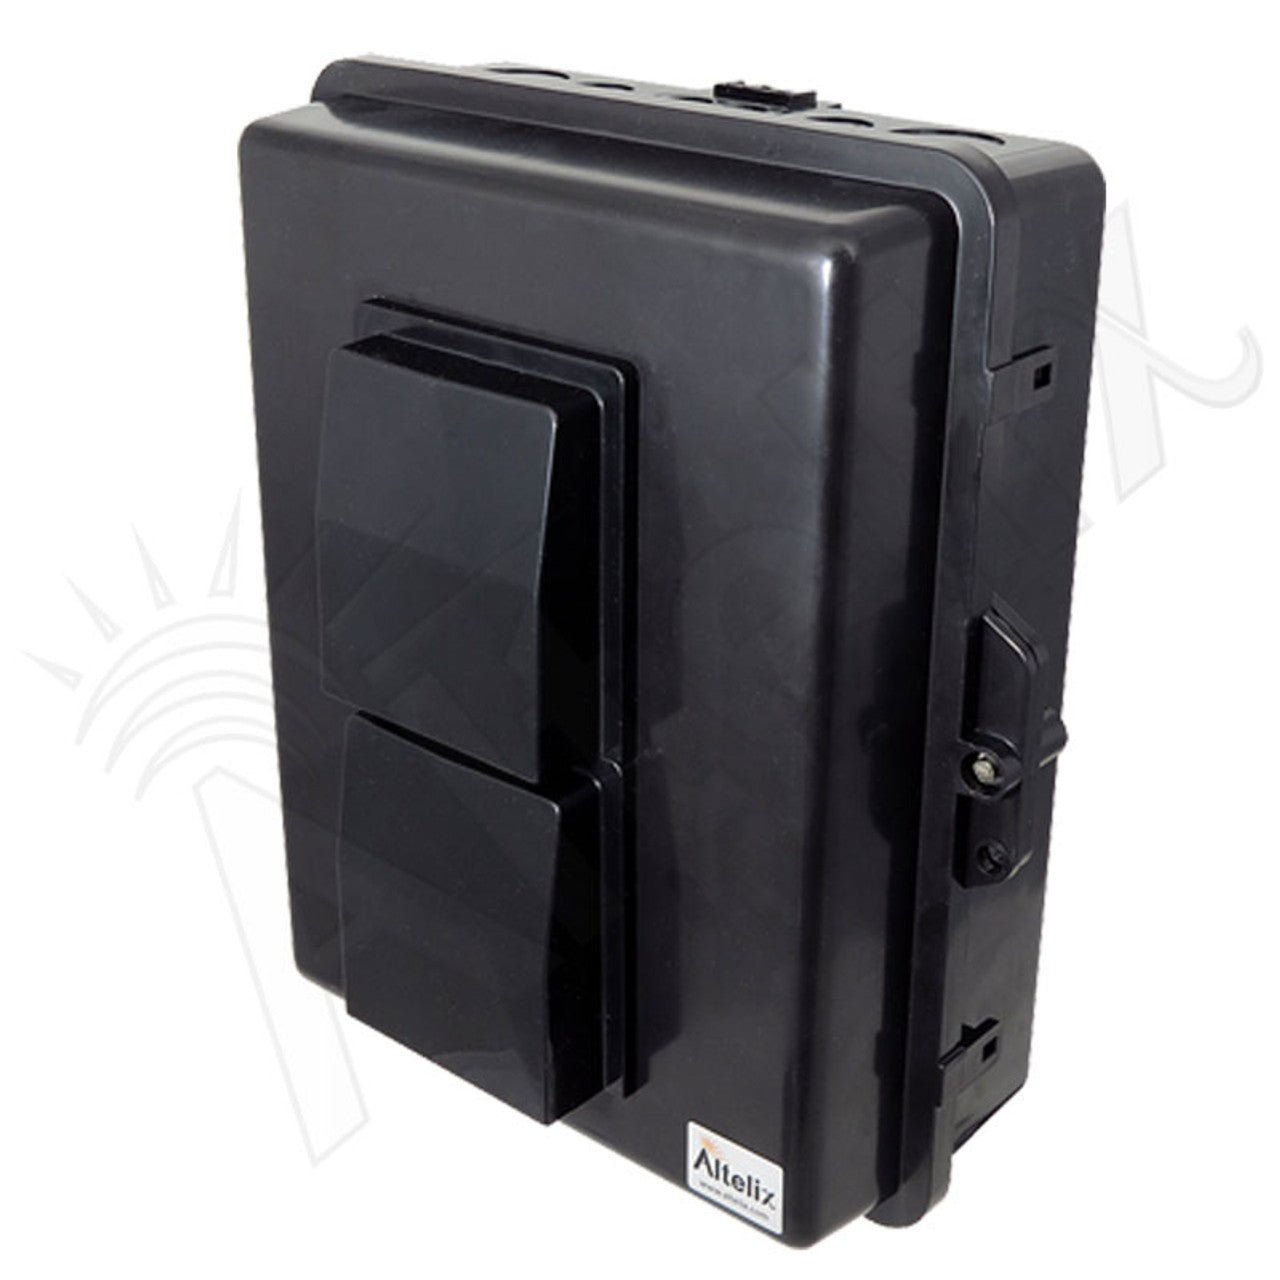 Altelix 14x11x5 PC + ABS Vented Weatherproof Utility Box NEMA Enclosure with Pole Mount Kit